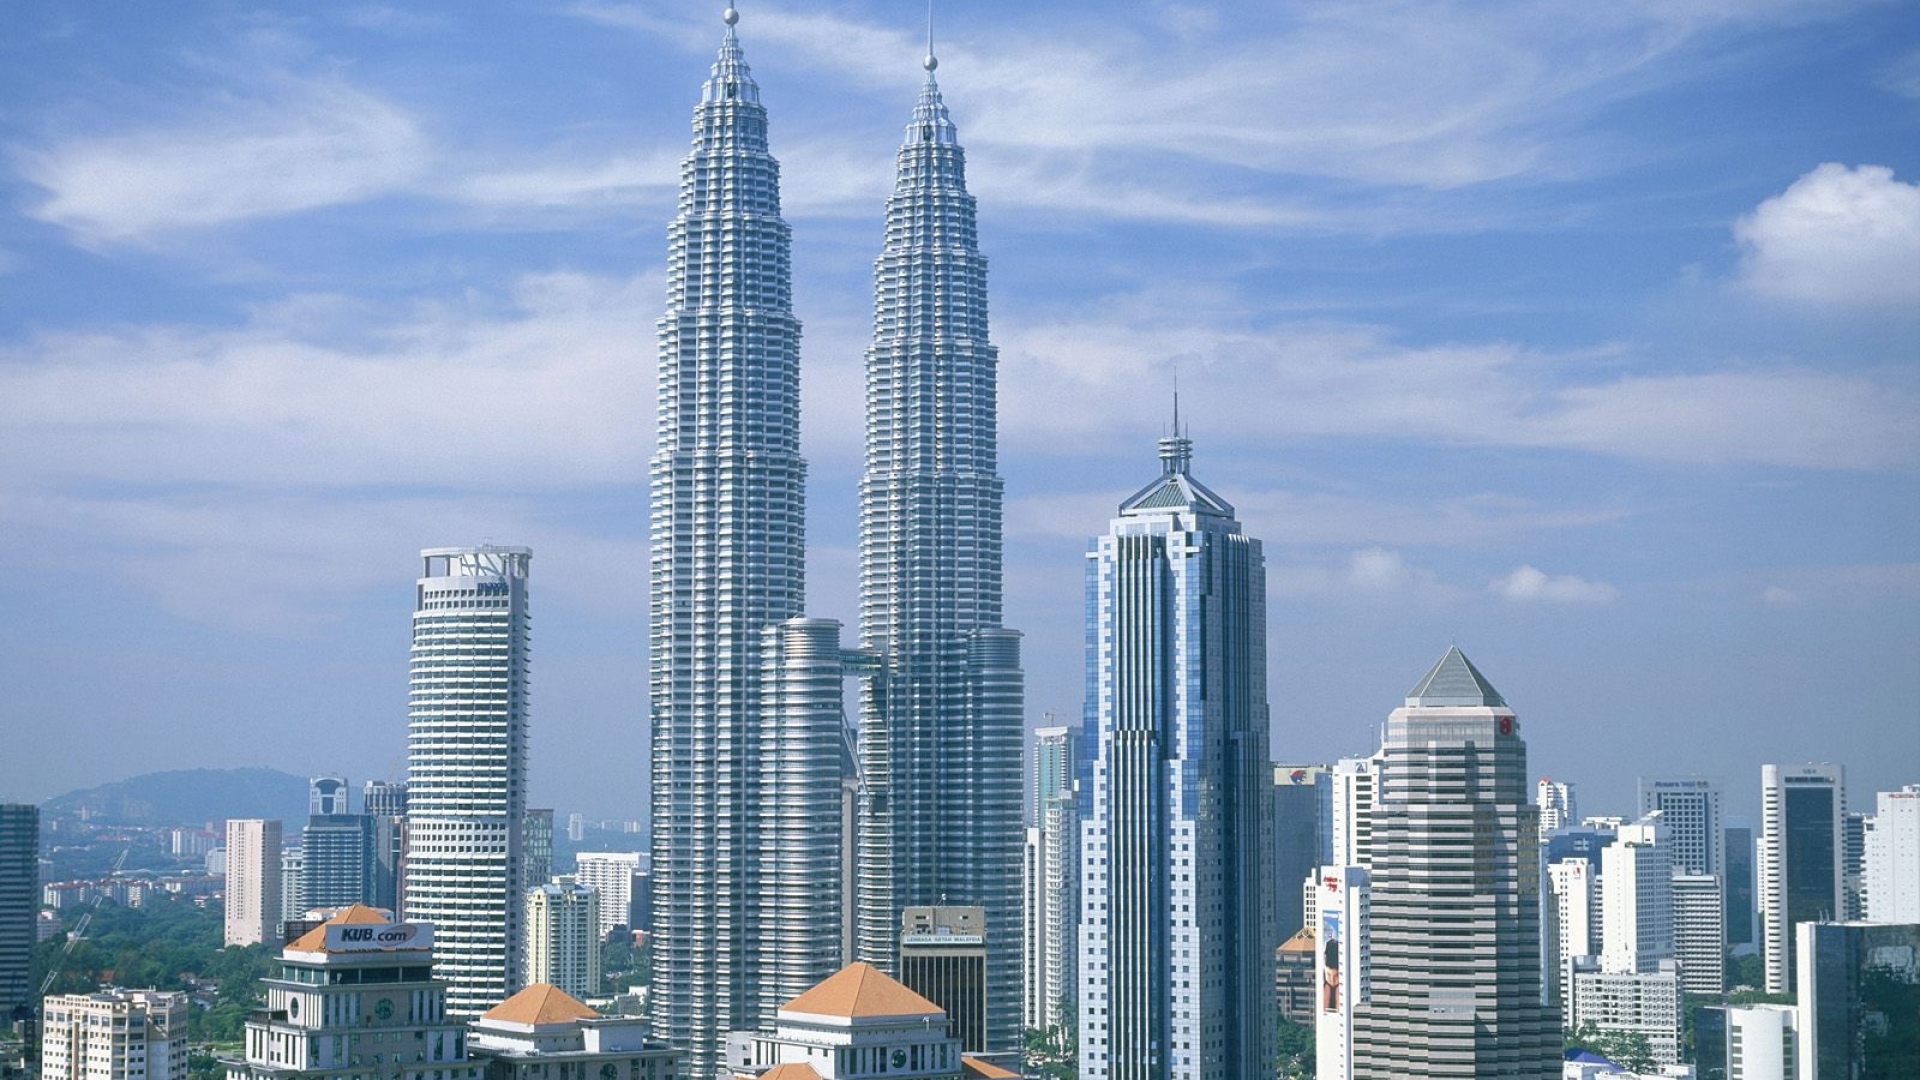 Malaysia Building White Stone Sky Skyscrapers 694 1920x1080